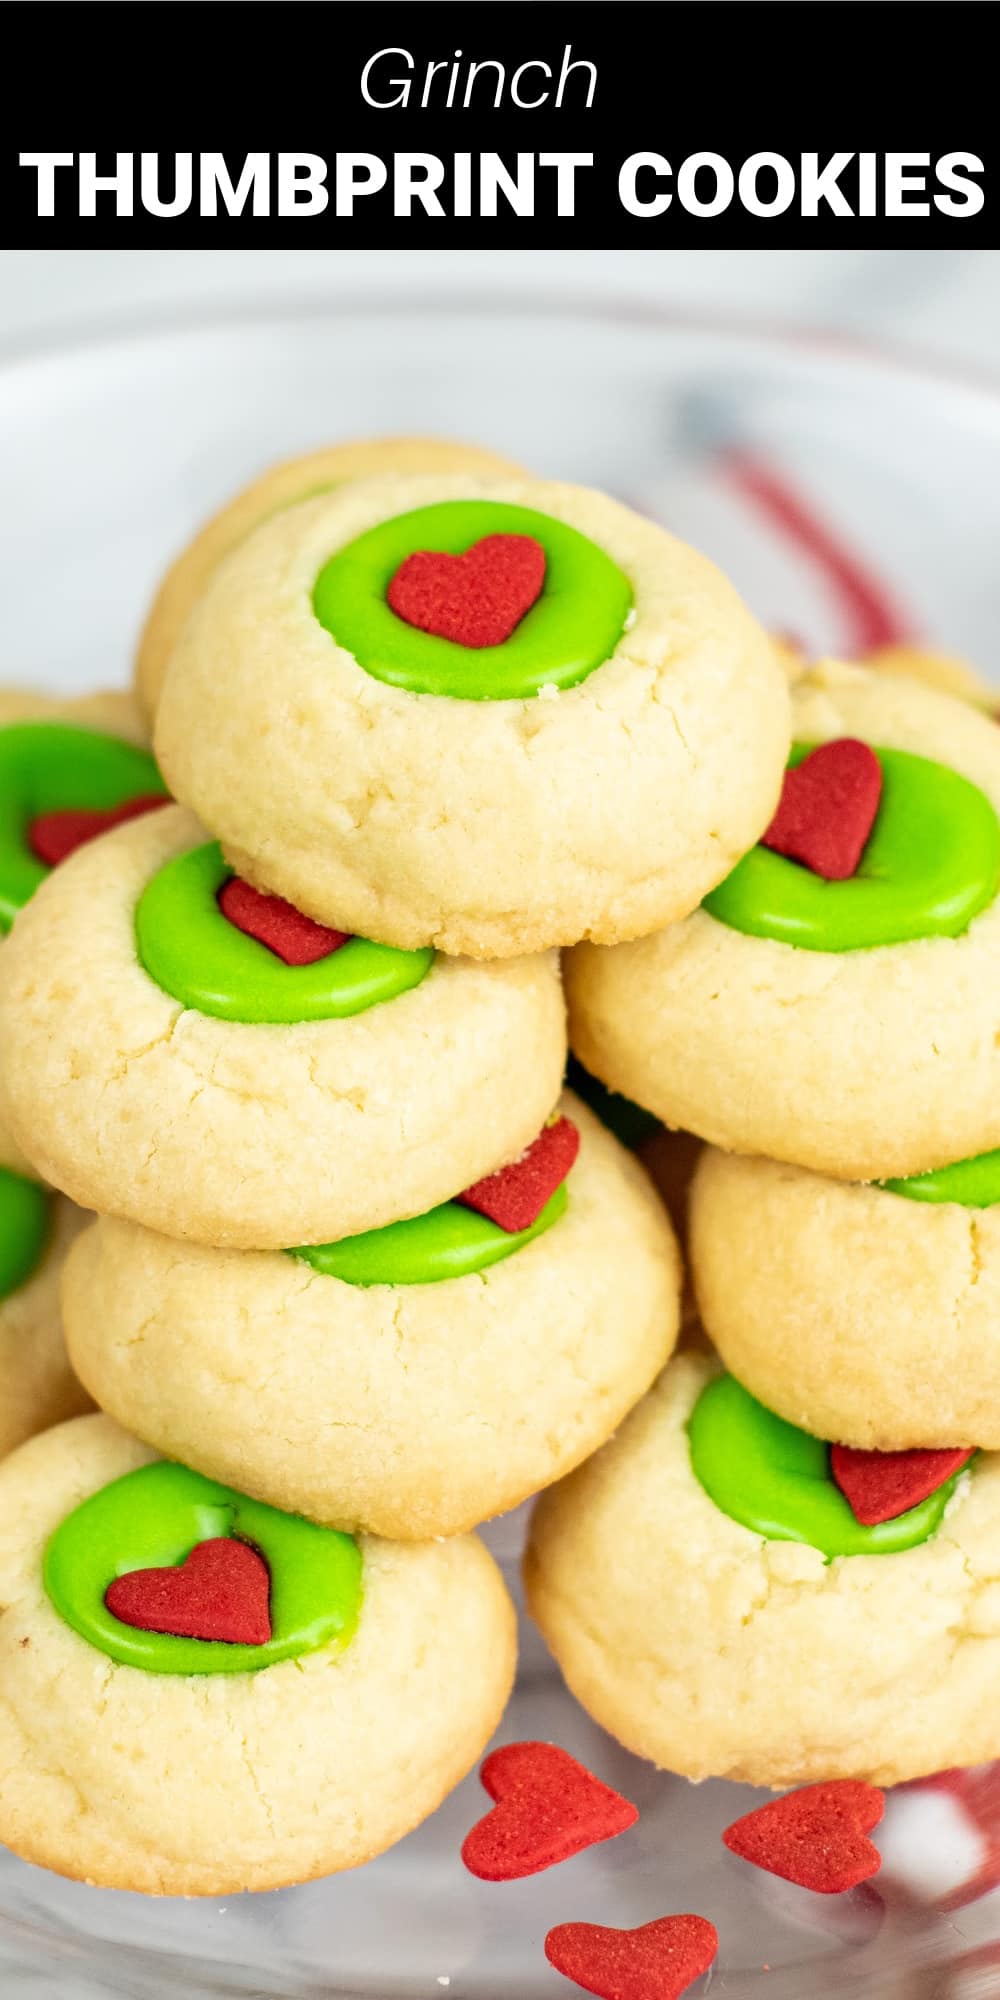 Grinch-inspired sugar thumbprint cookies. 